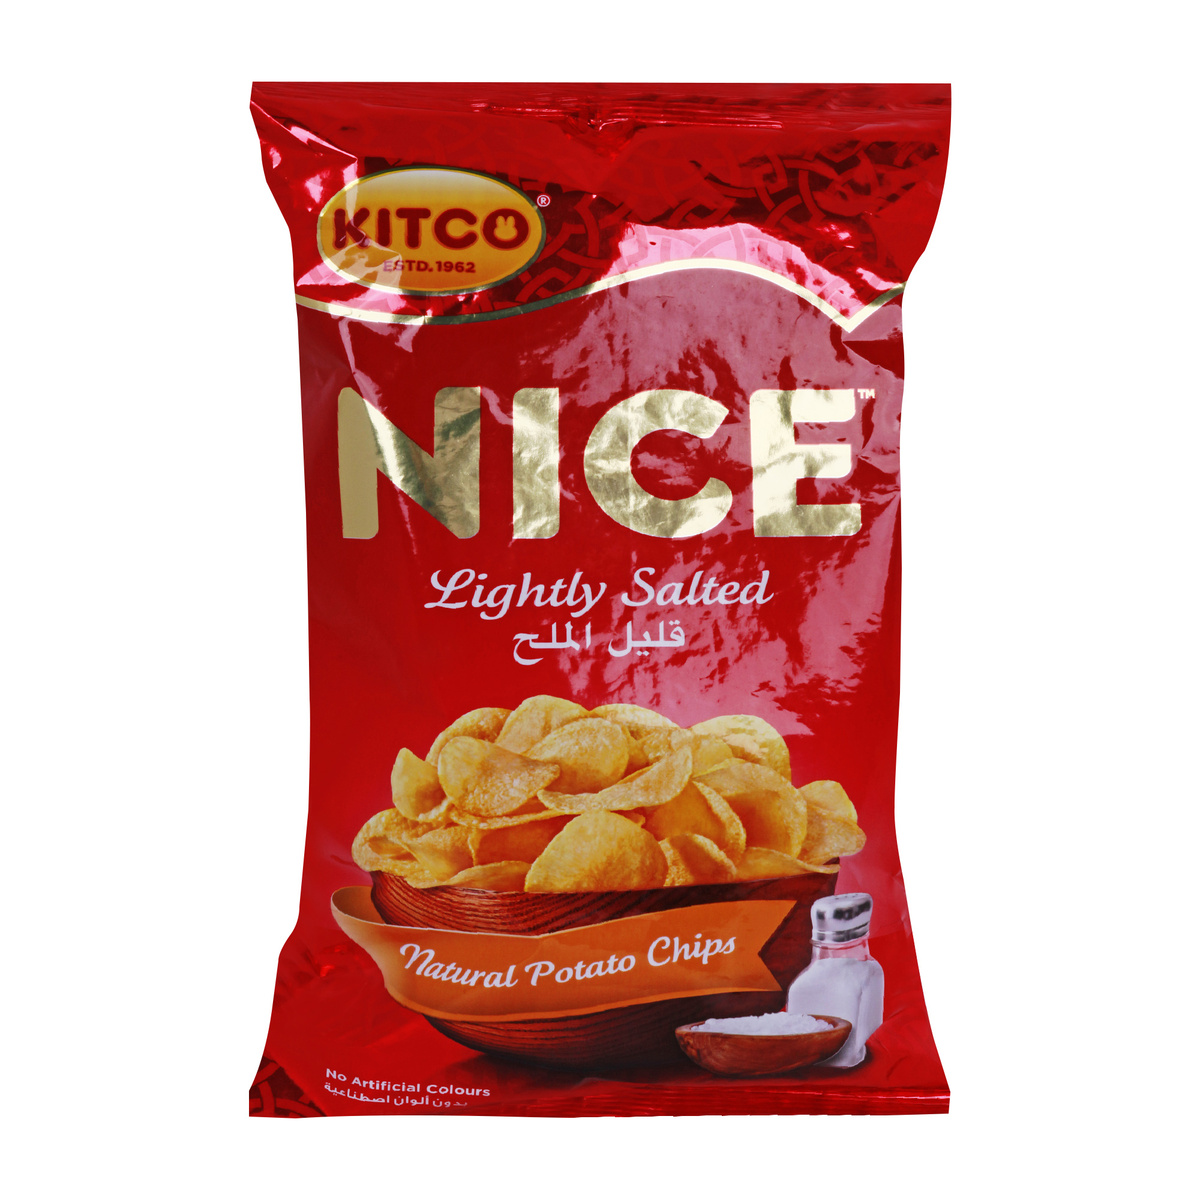 Kitco Nice Natural Potato Chips Lightly Salted 167g